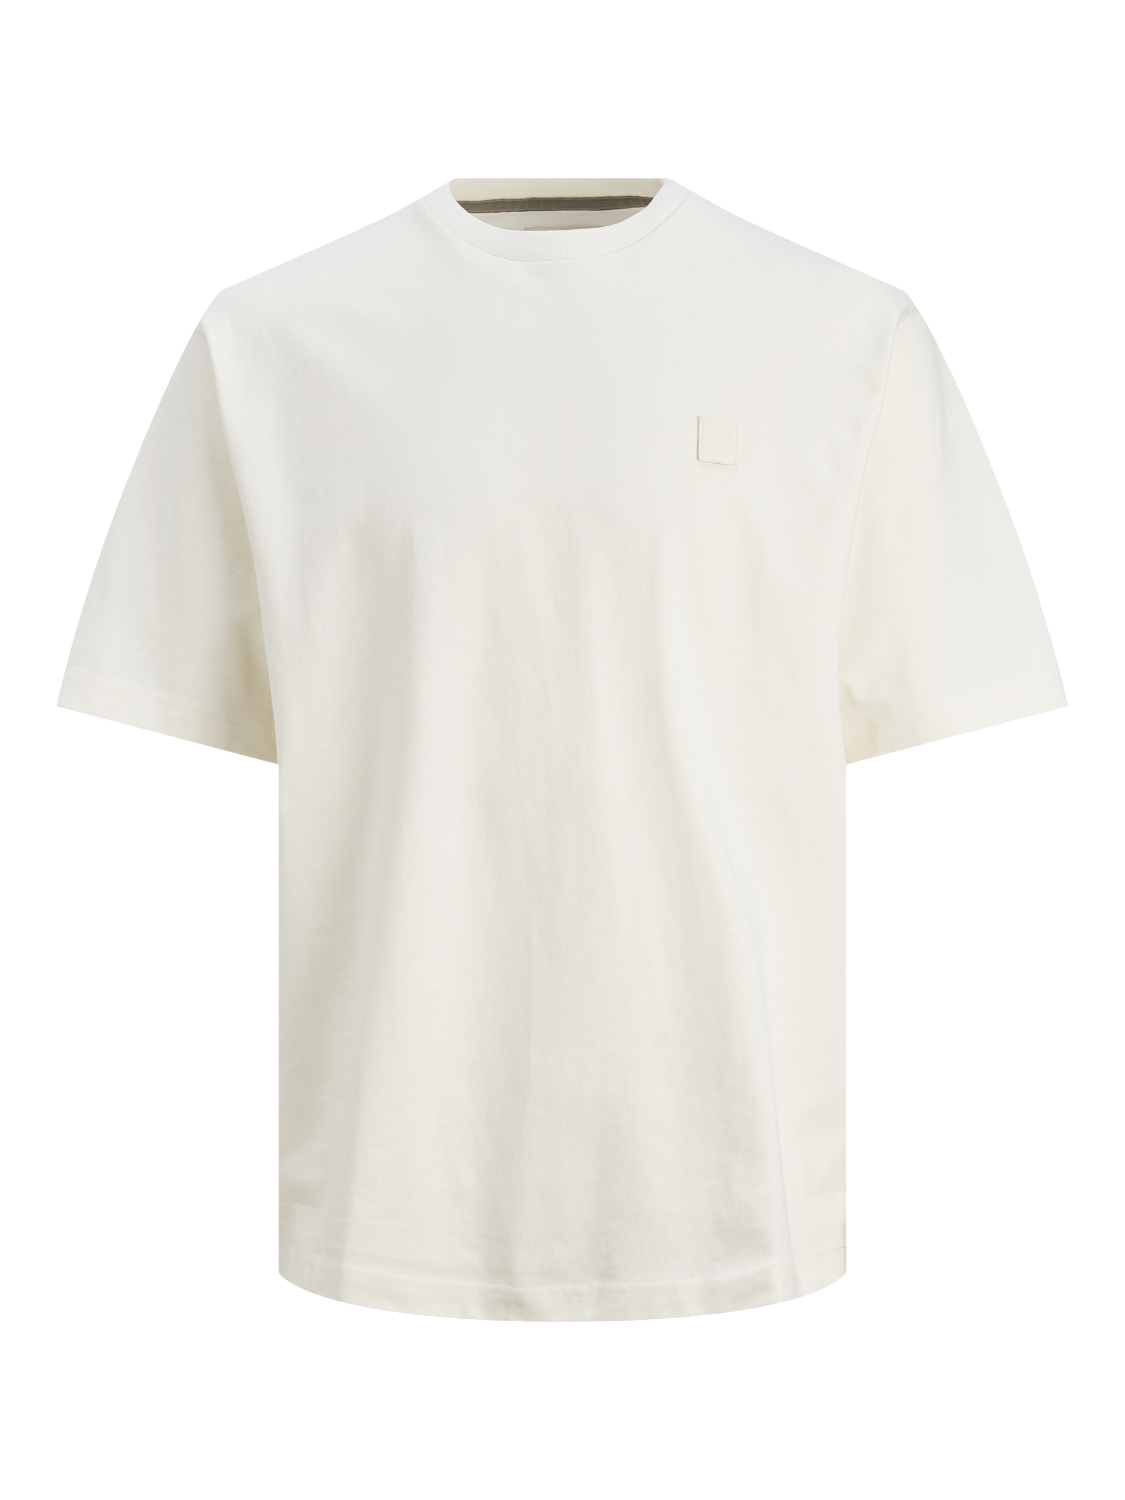 Camiseta básica de manga corta blanca - JPRCC